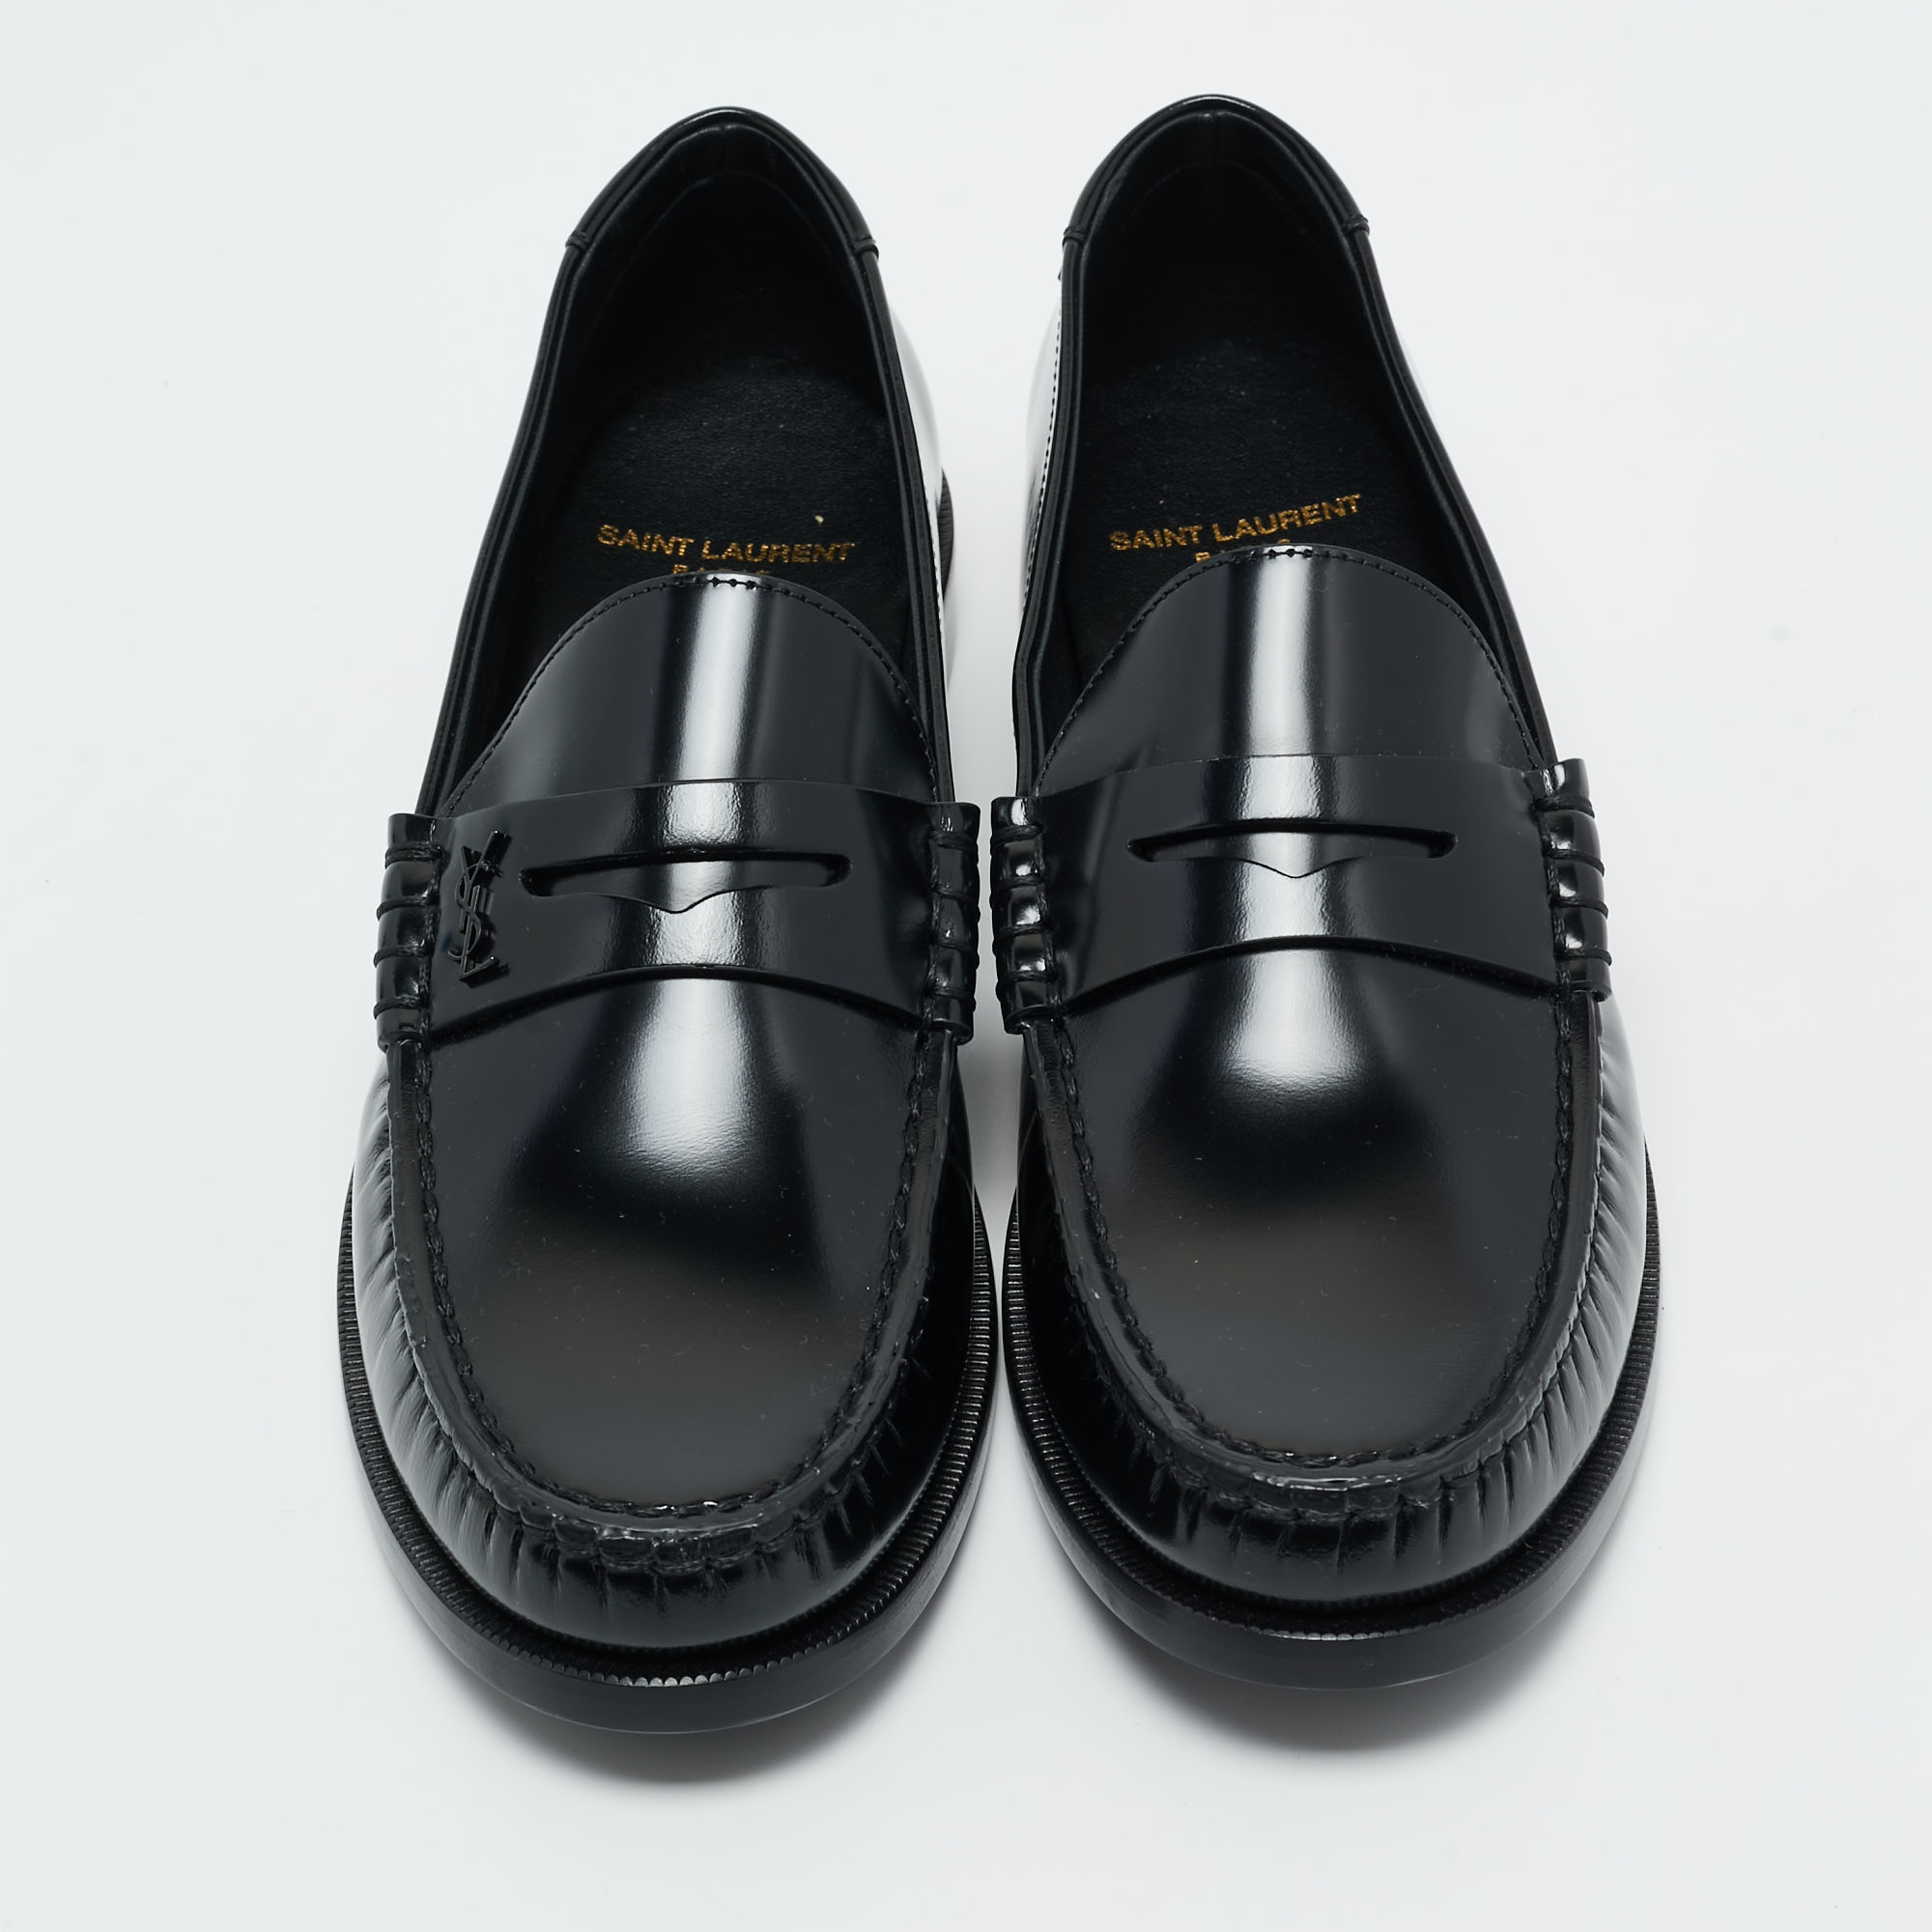 Saint Laurent Black Leather Penny Slip On Loafers Size 39.5